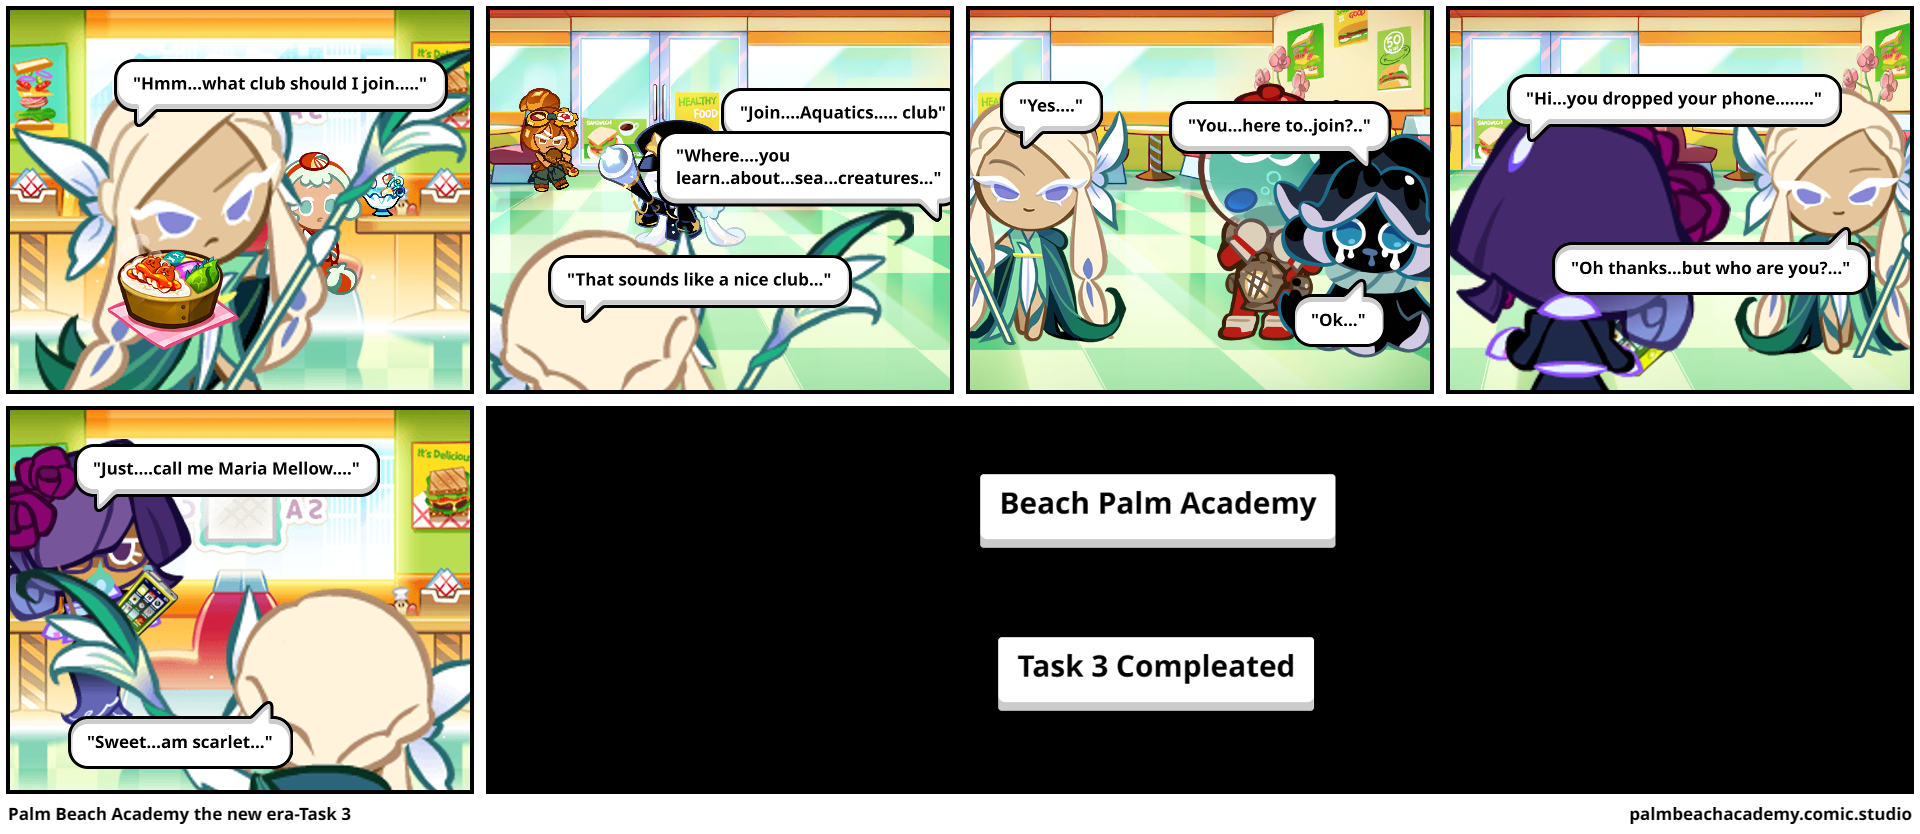 Palm Beach Academy the new era-Task 3